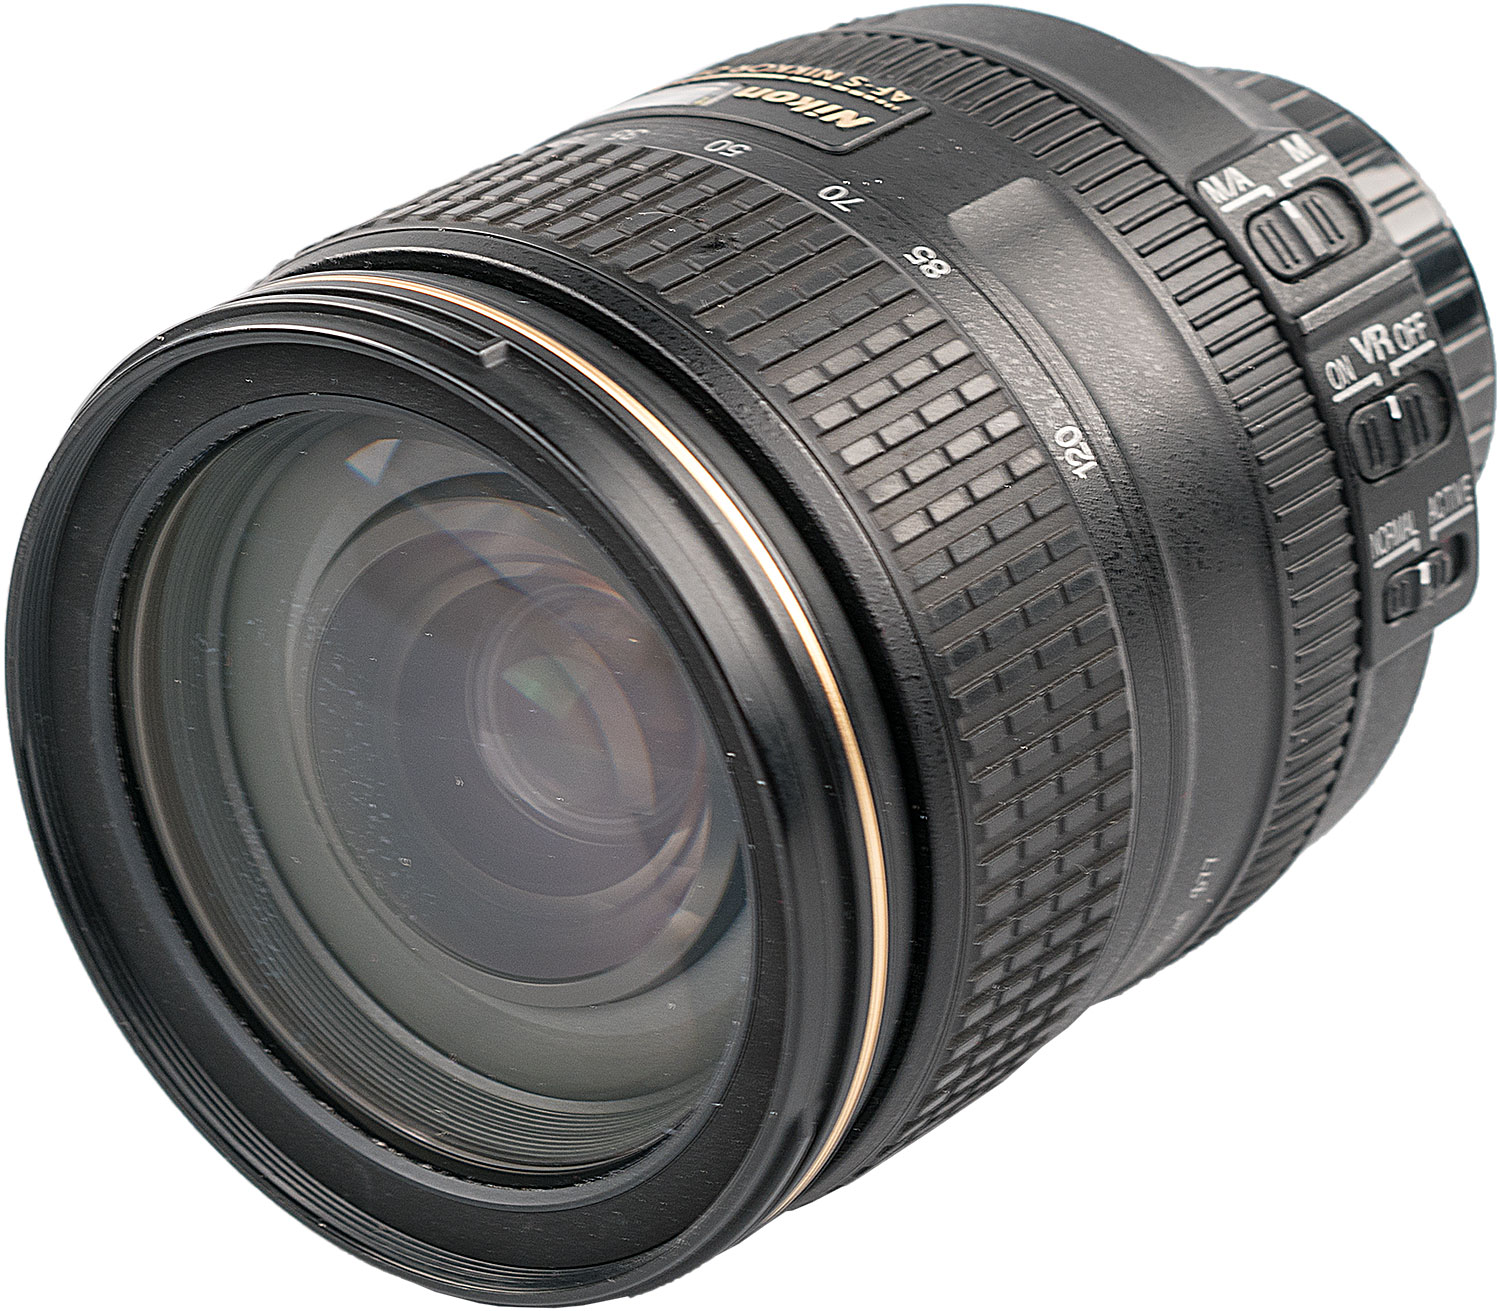 24 120mm f 4g vr. Nikon 24-120mm f/4g ed VR af-s Nikkor. Nikkor 24-120mm f/4g ed VR.